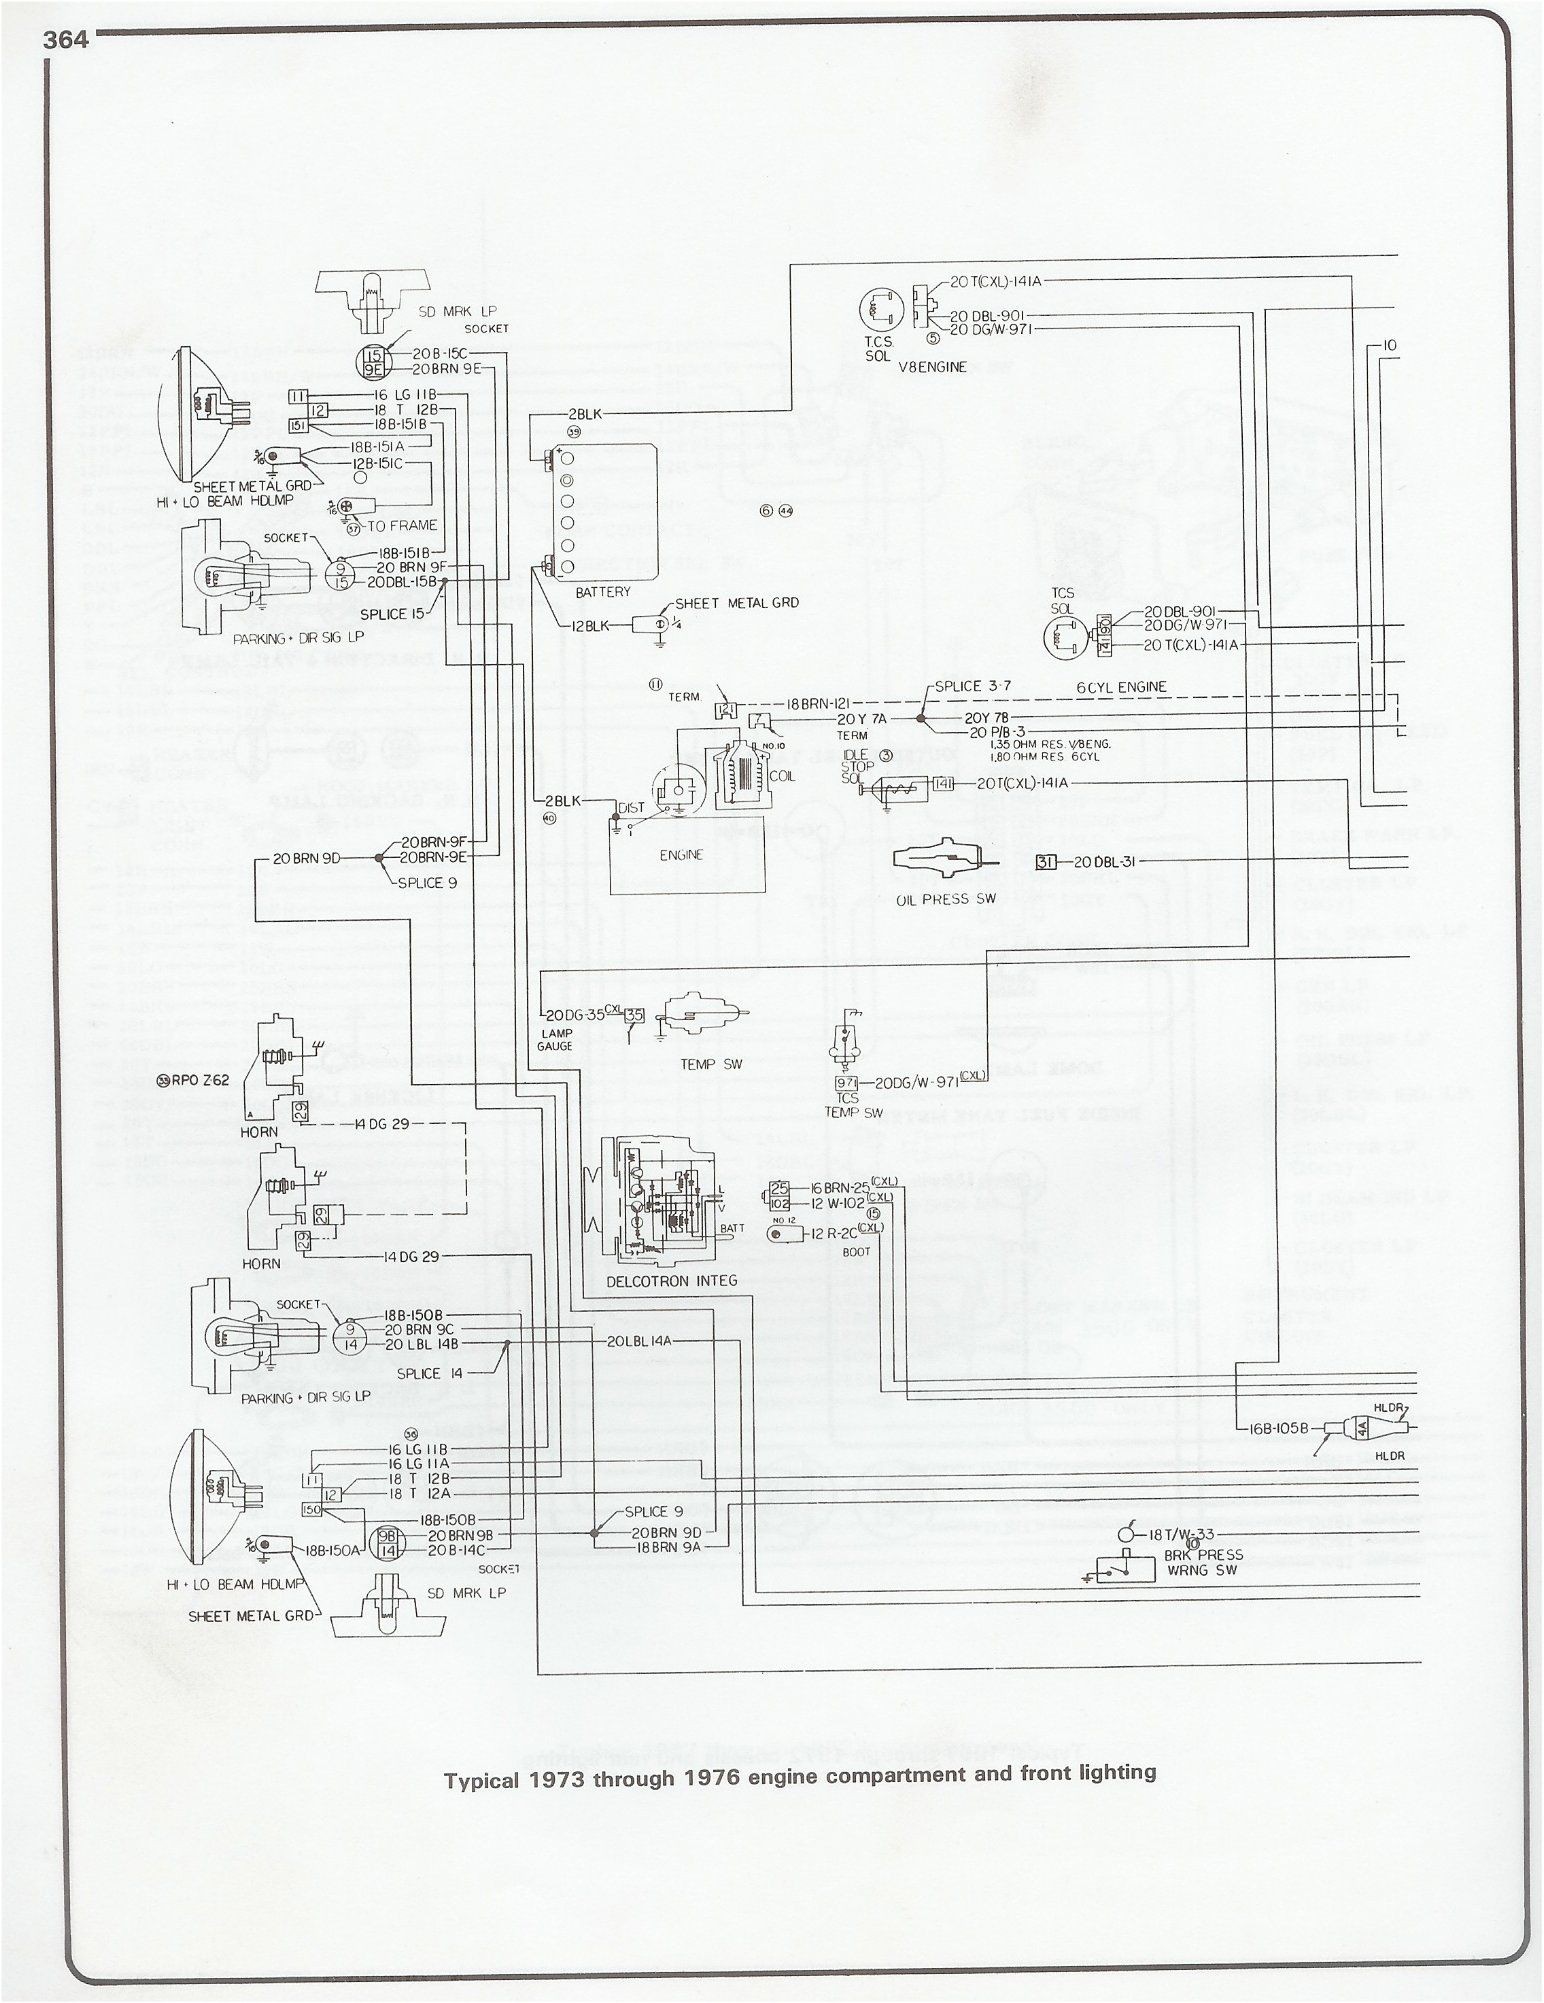 1979 Chevrolet Pickup Electrique Wiring Diagram Wiring Diagram 1973 1976 Chevy Pickup Chevy Wiring Of 1979 Chevrolet Pickup Electrique Wiring Diagram